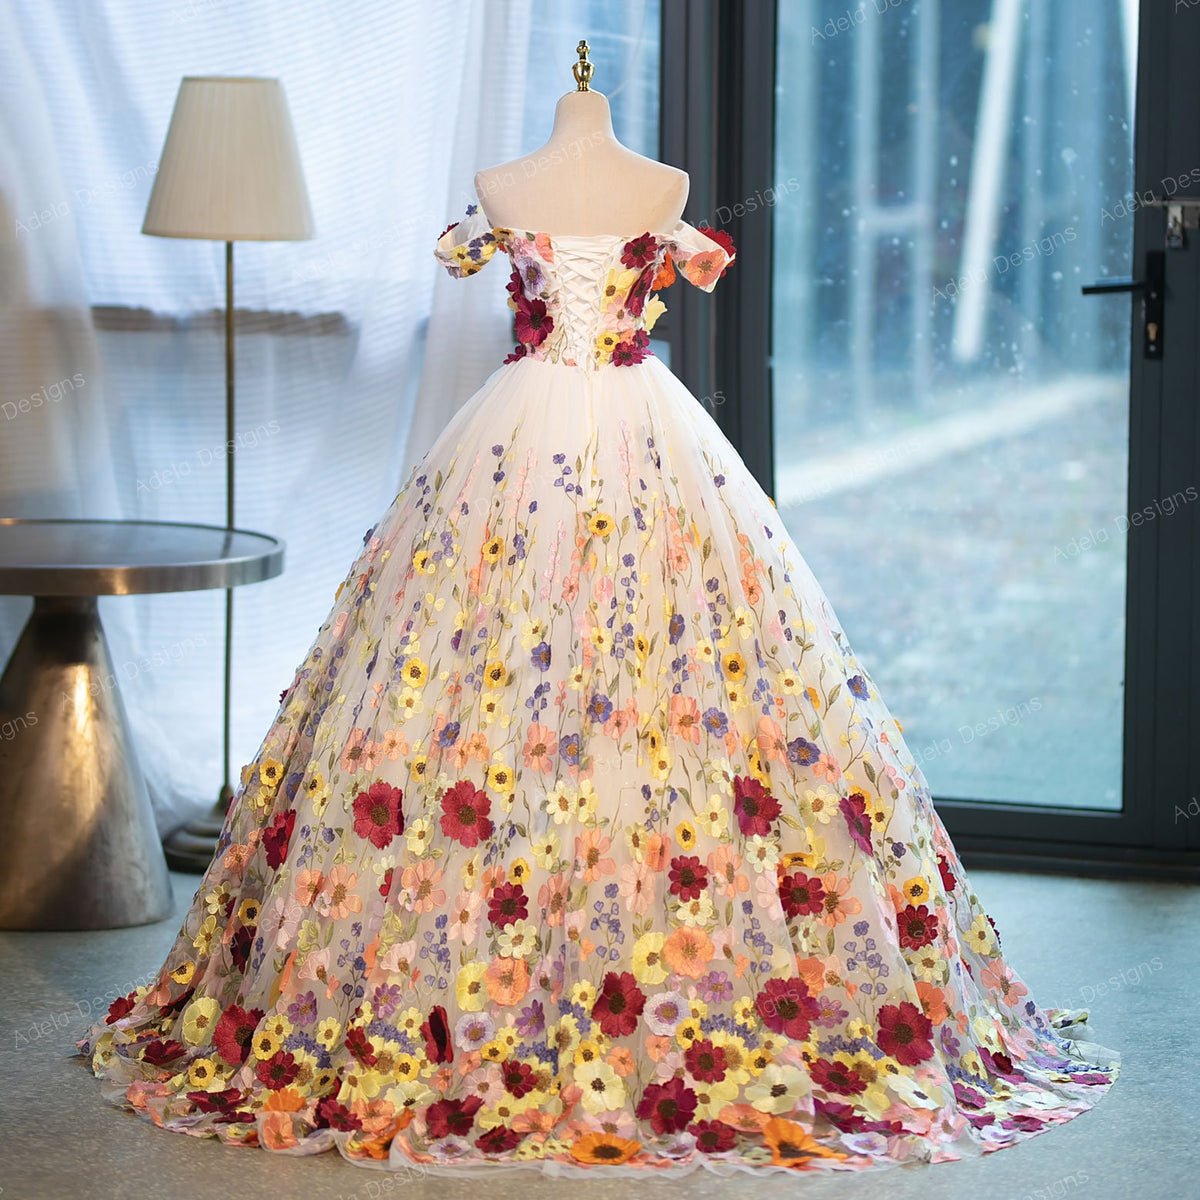 3D Floral Lace Ball Gown Wedding Dress Bridal Off The Shoulder Lace Bare Shoulders Open Back Ballgown Corset Back Colorful Dress